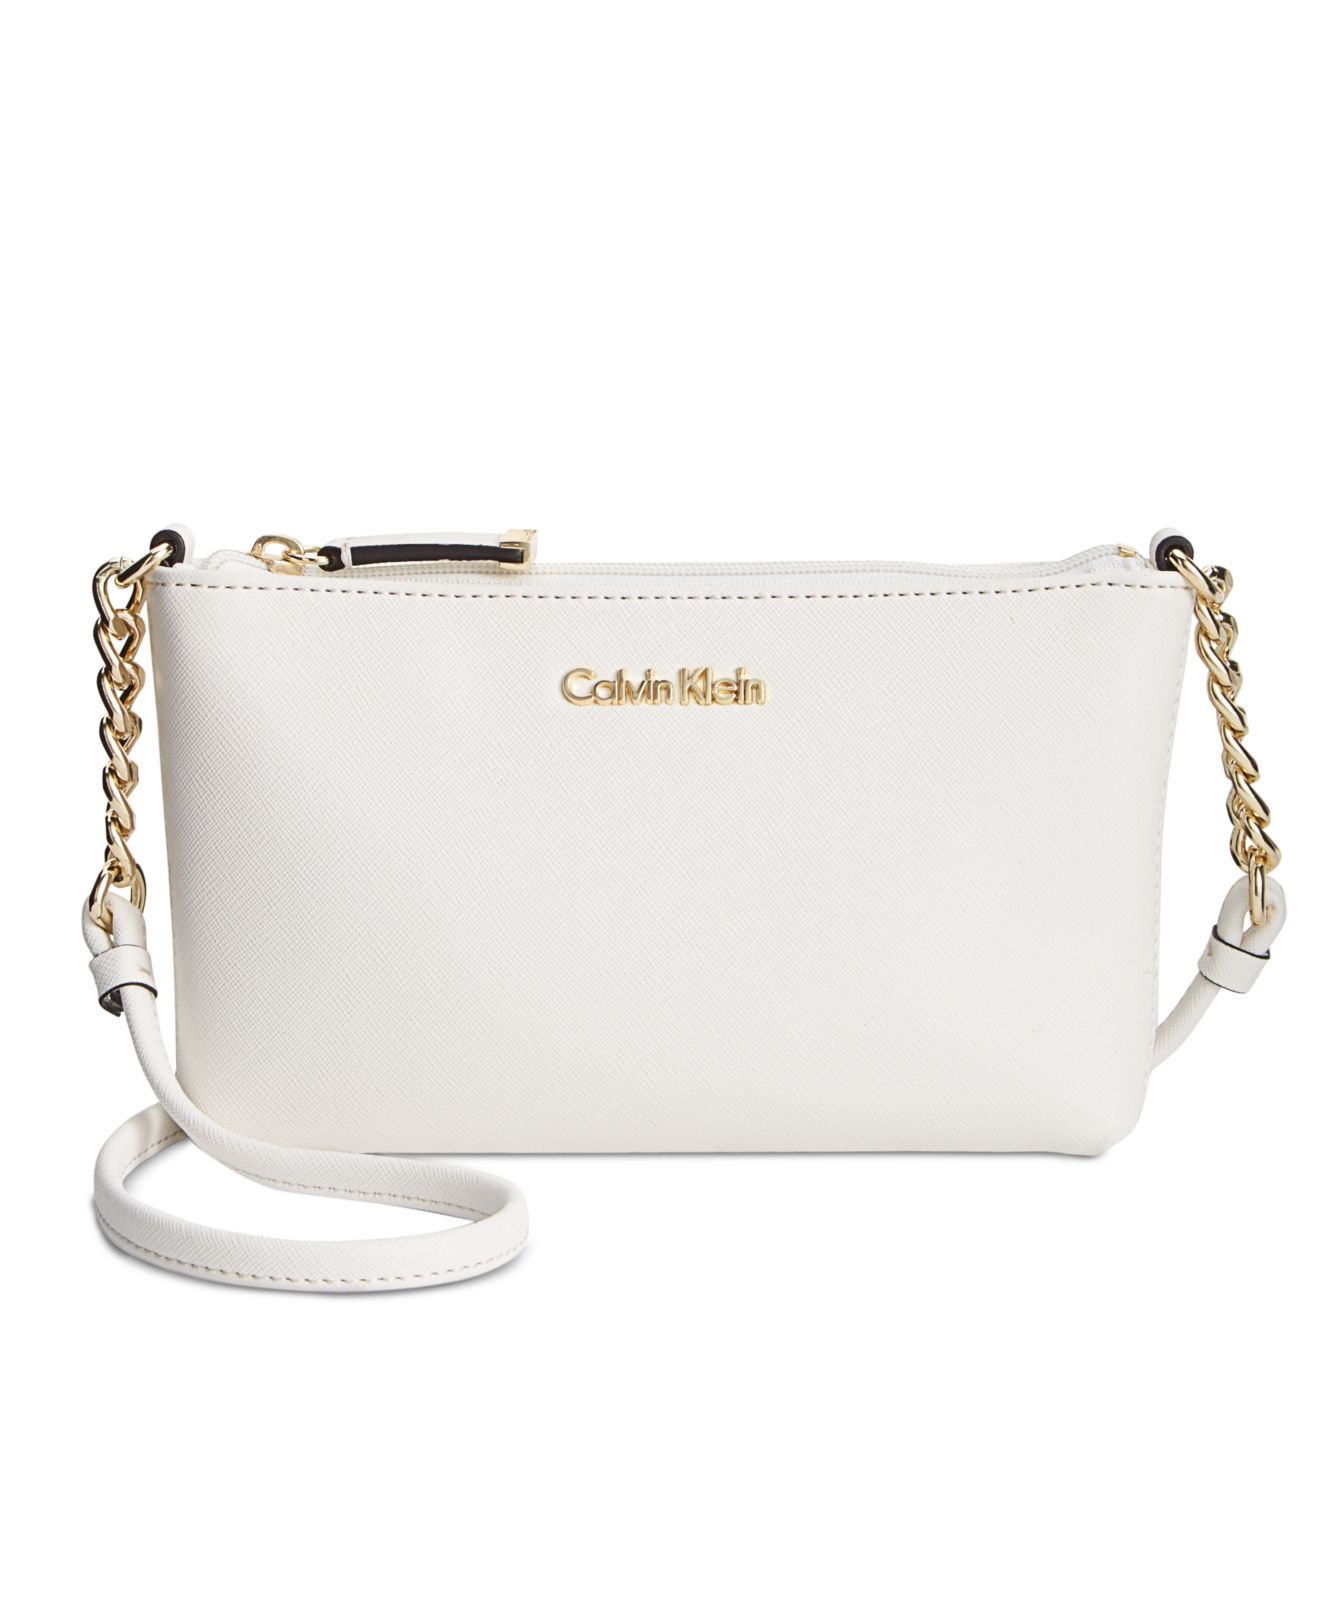 Calvin Klein White Crossbody Bag Outlet, 53% OFF | www.colegiogamarra.com